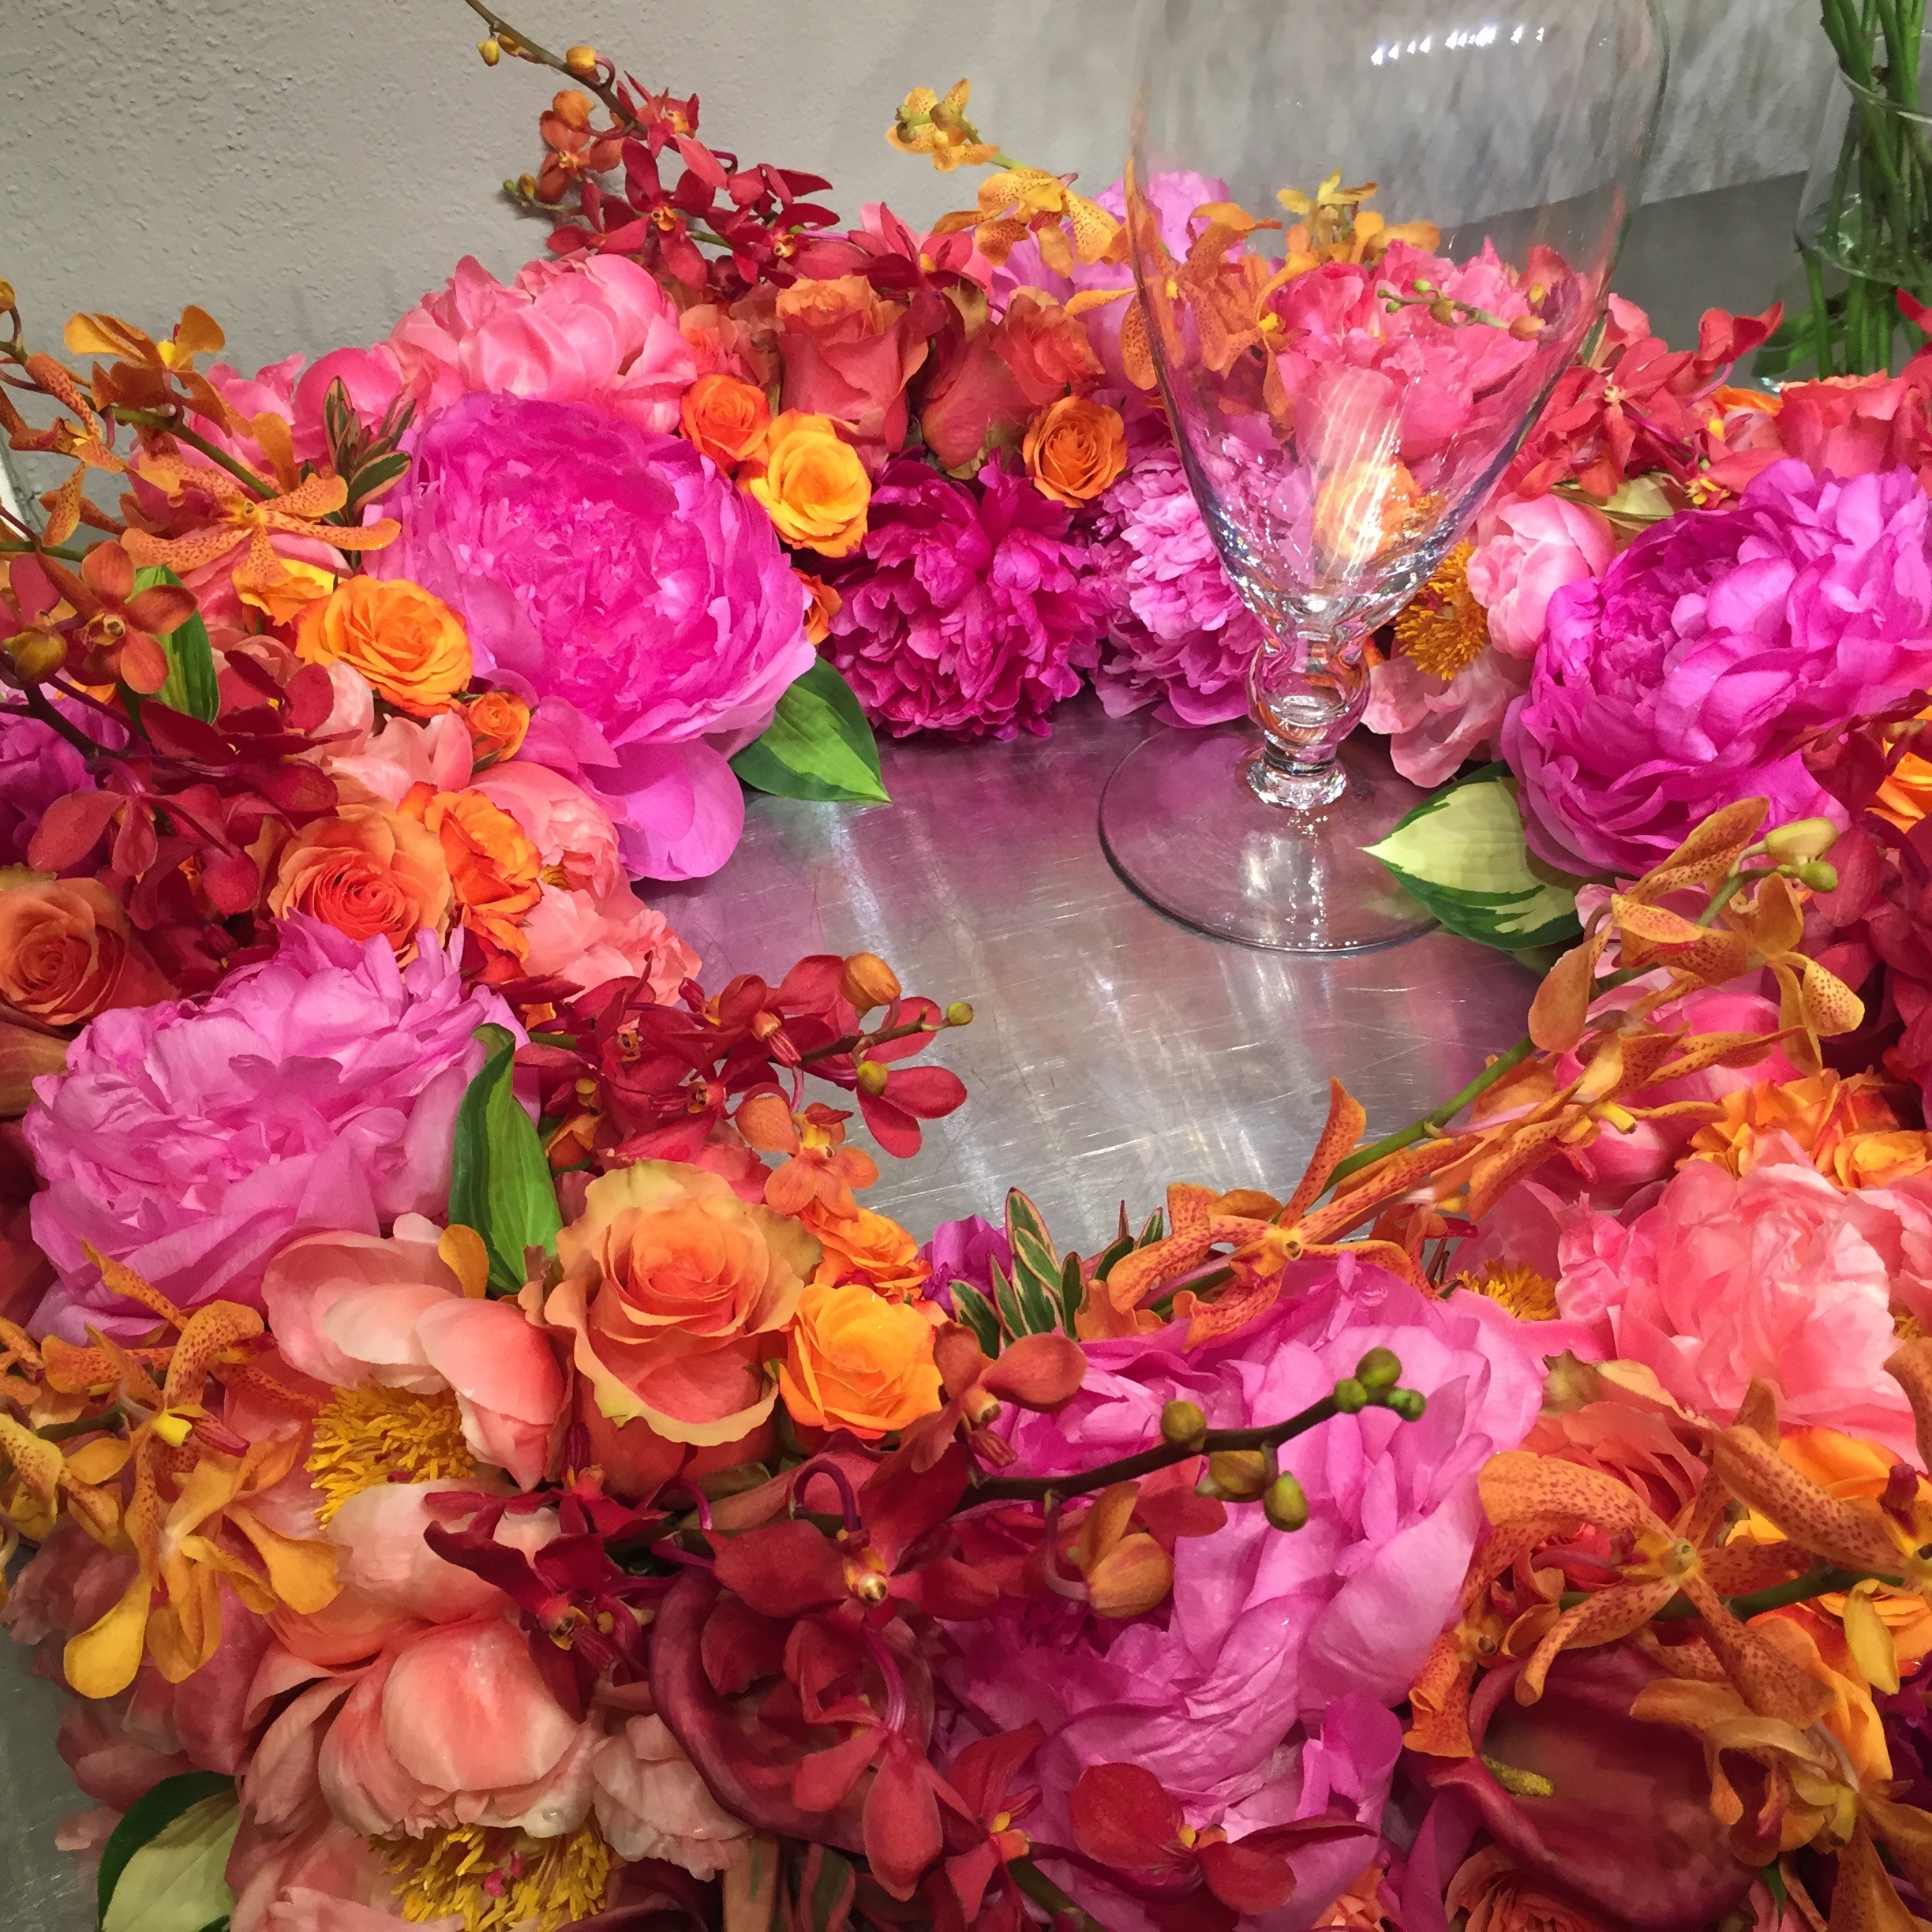 Sympathy Wreath with Pink, Hot Pink and Coral Peonies, Red and Orange Mokara, Orange Sweetheart and Samba Roses